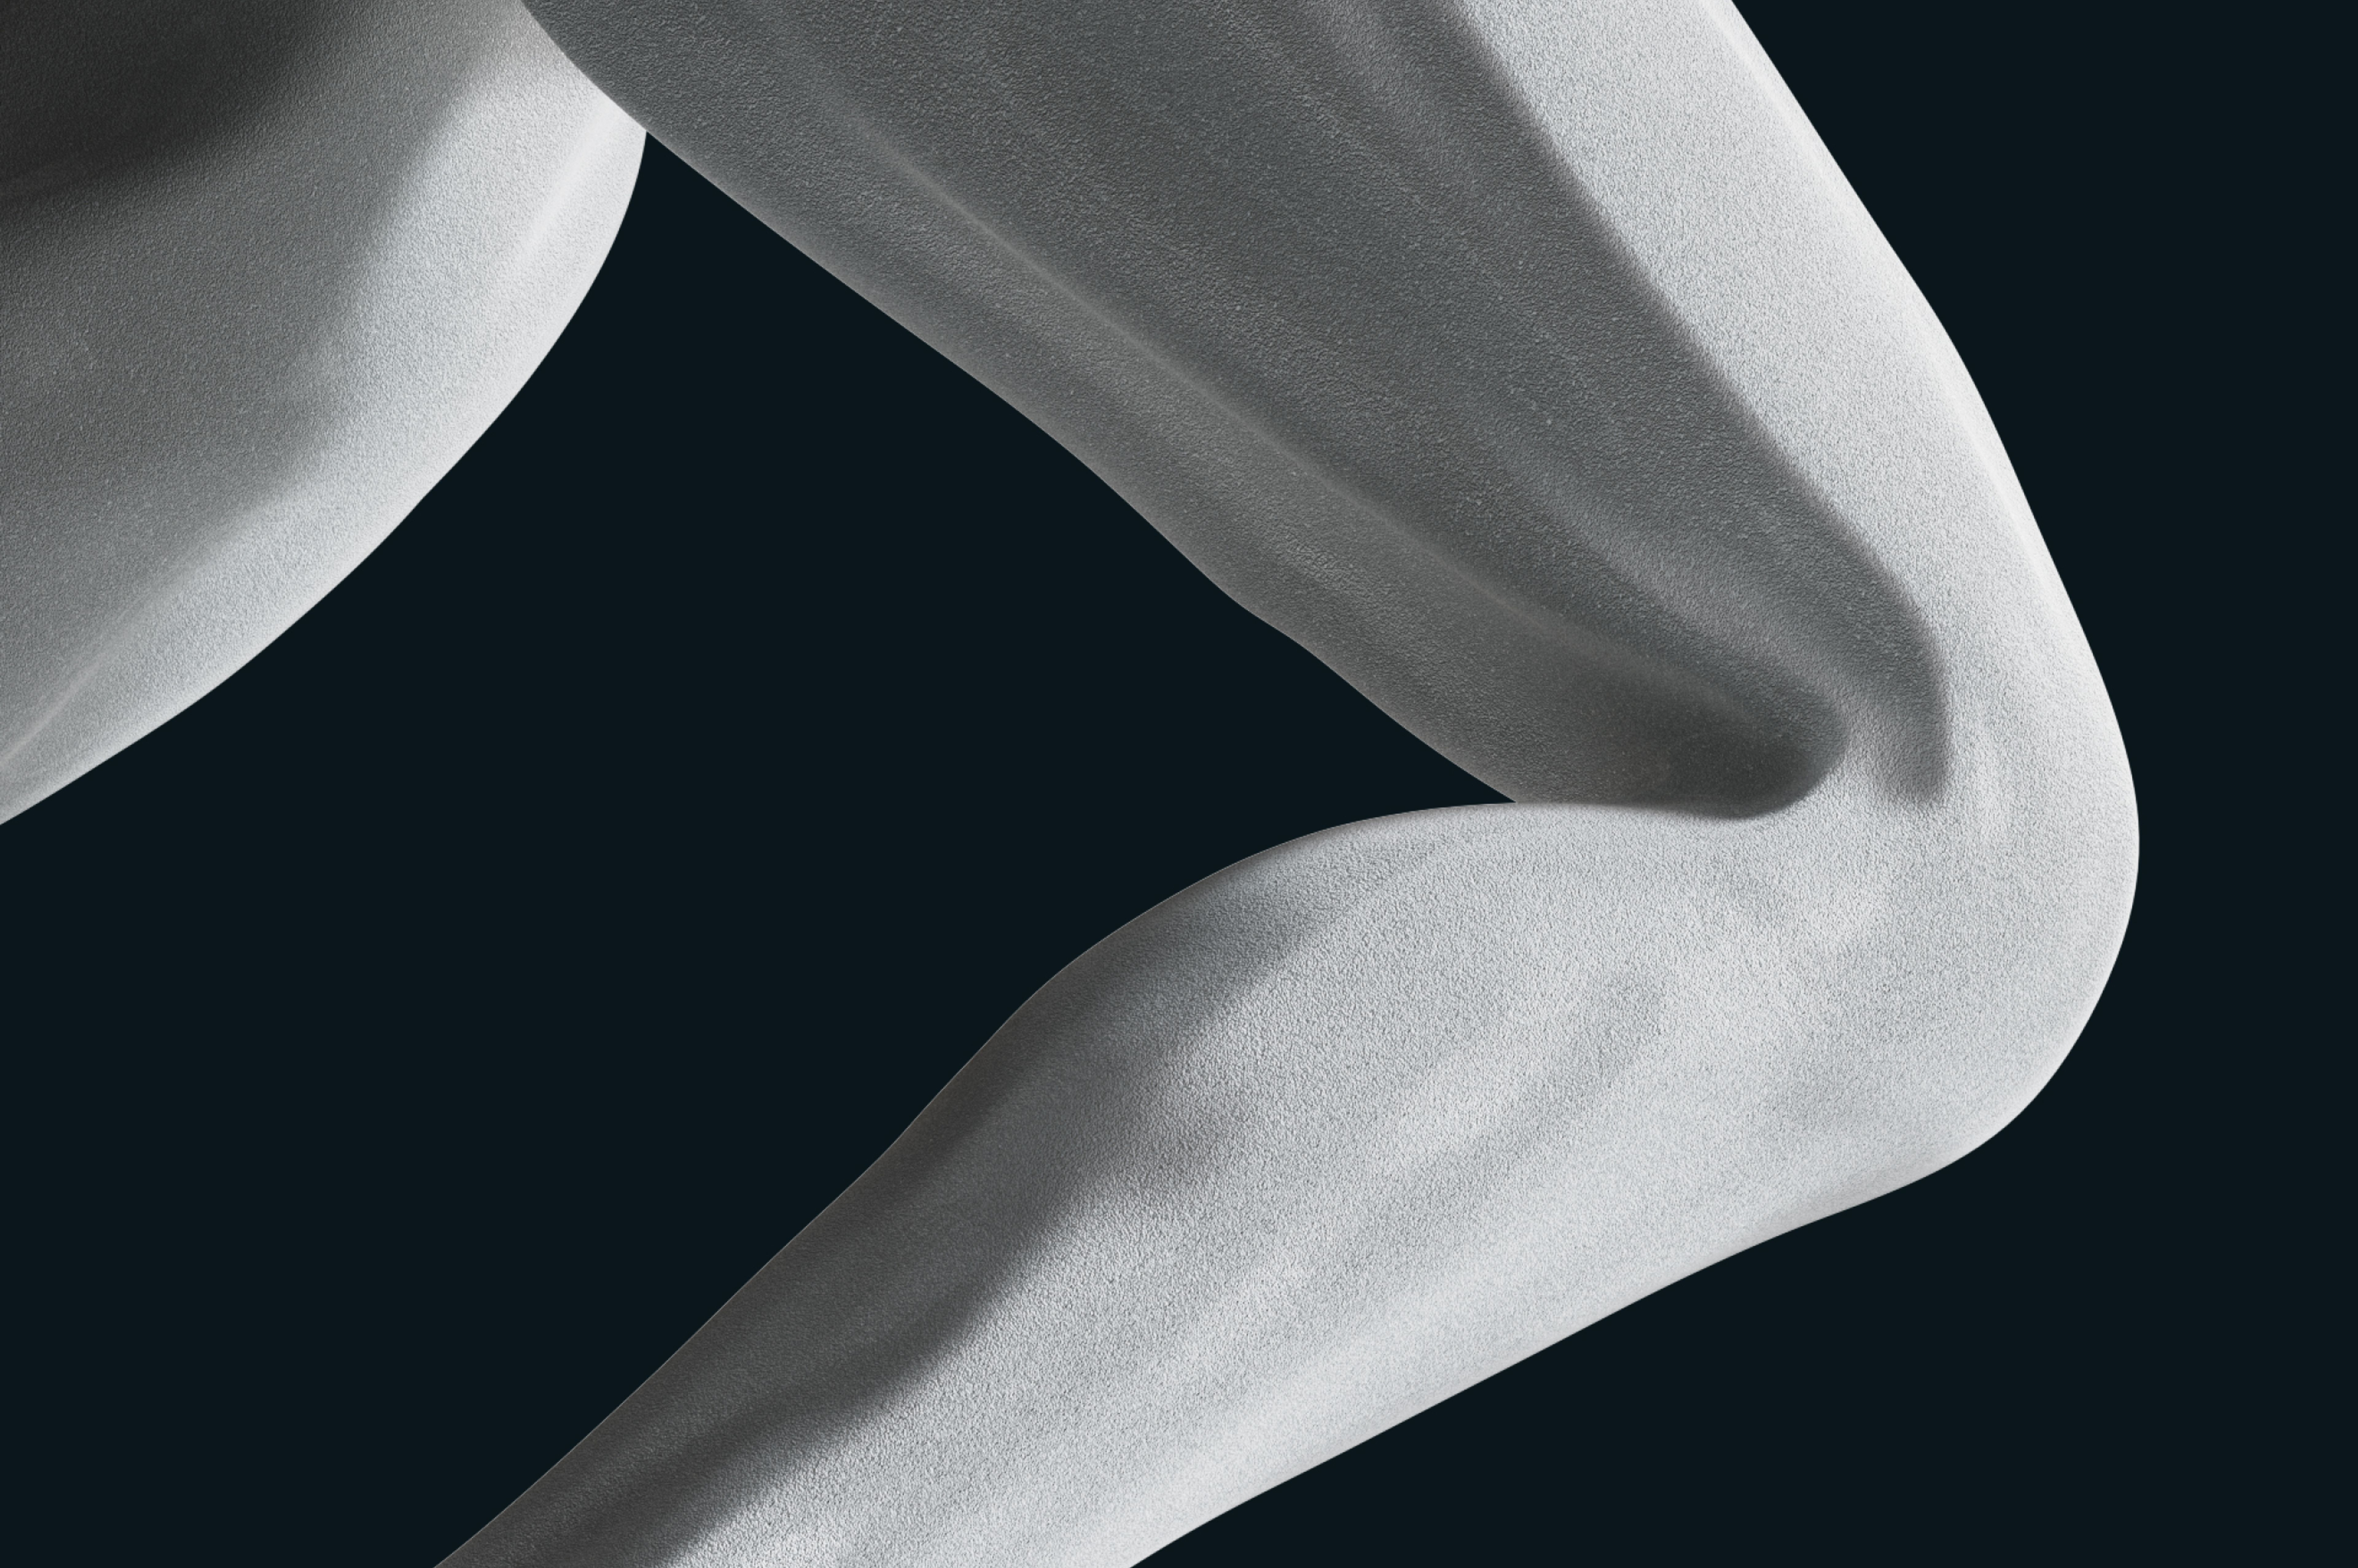 3D illustration of leg muscles running